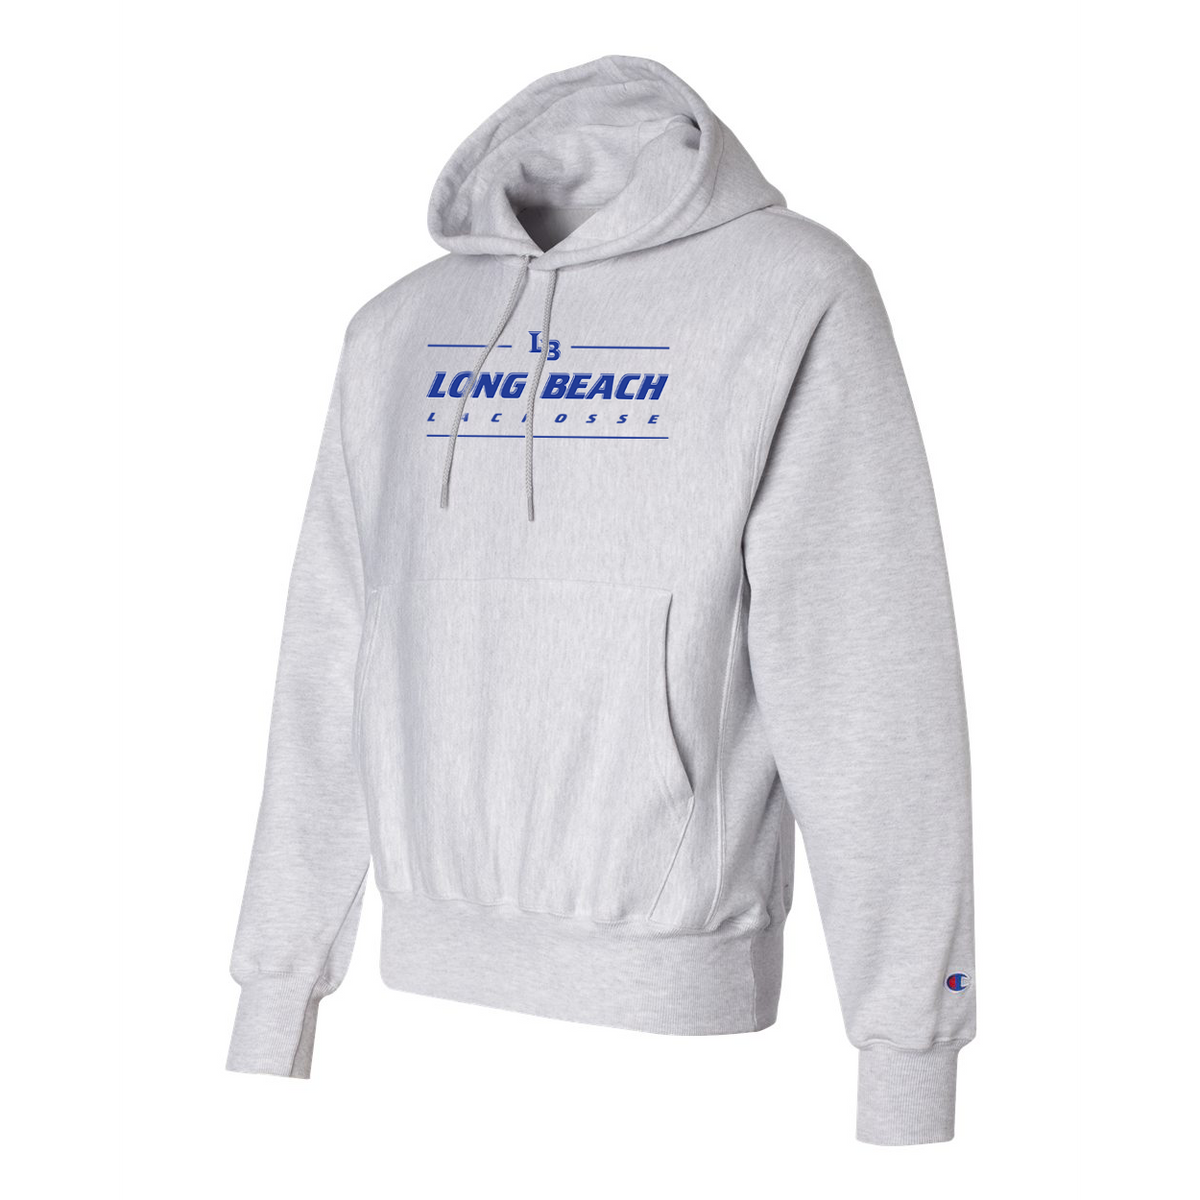 Long Beach HS Lacrosse Champion Sweatshirt